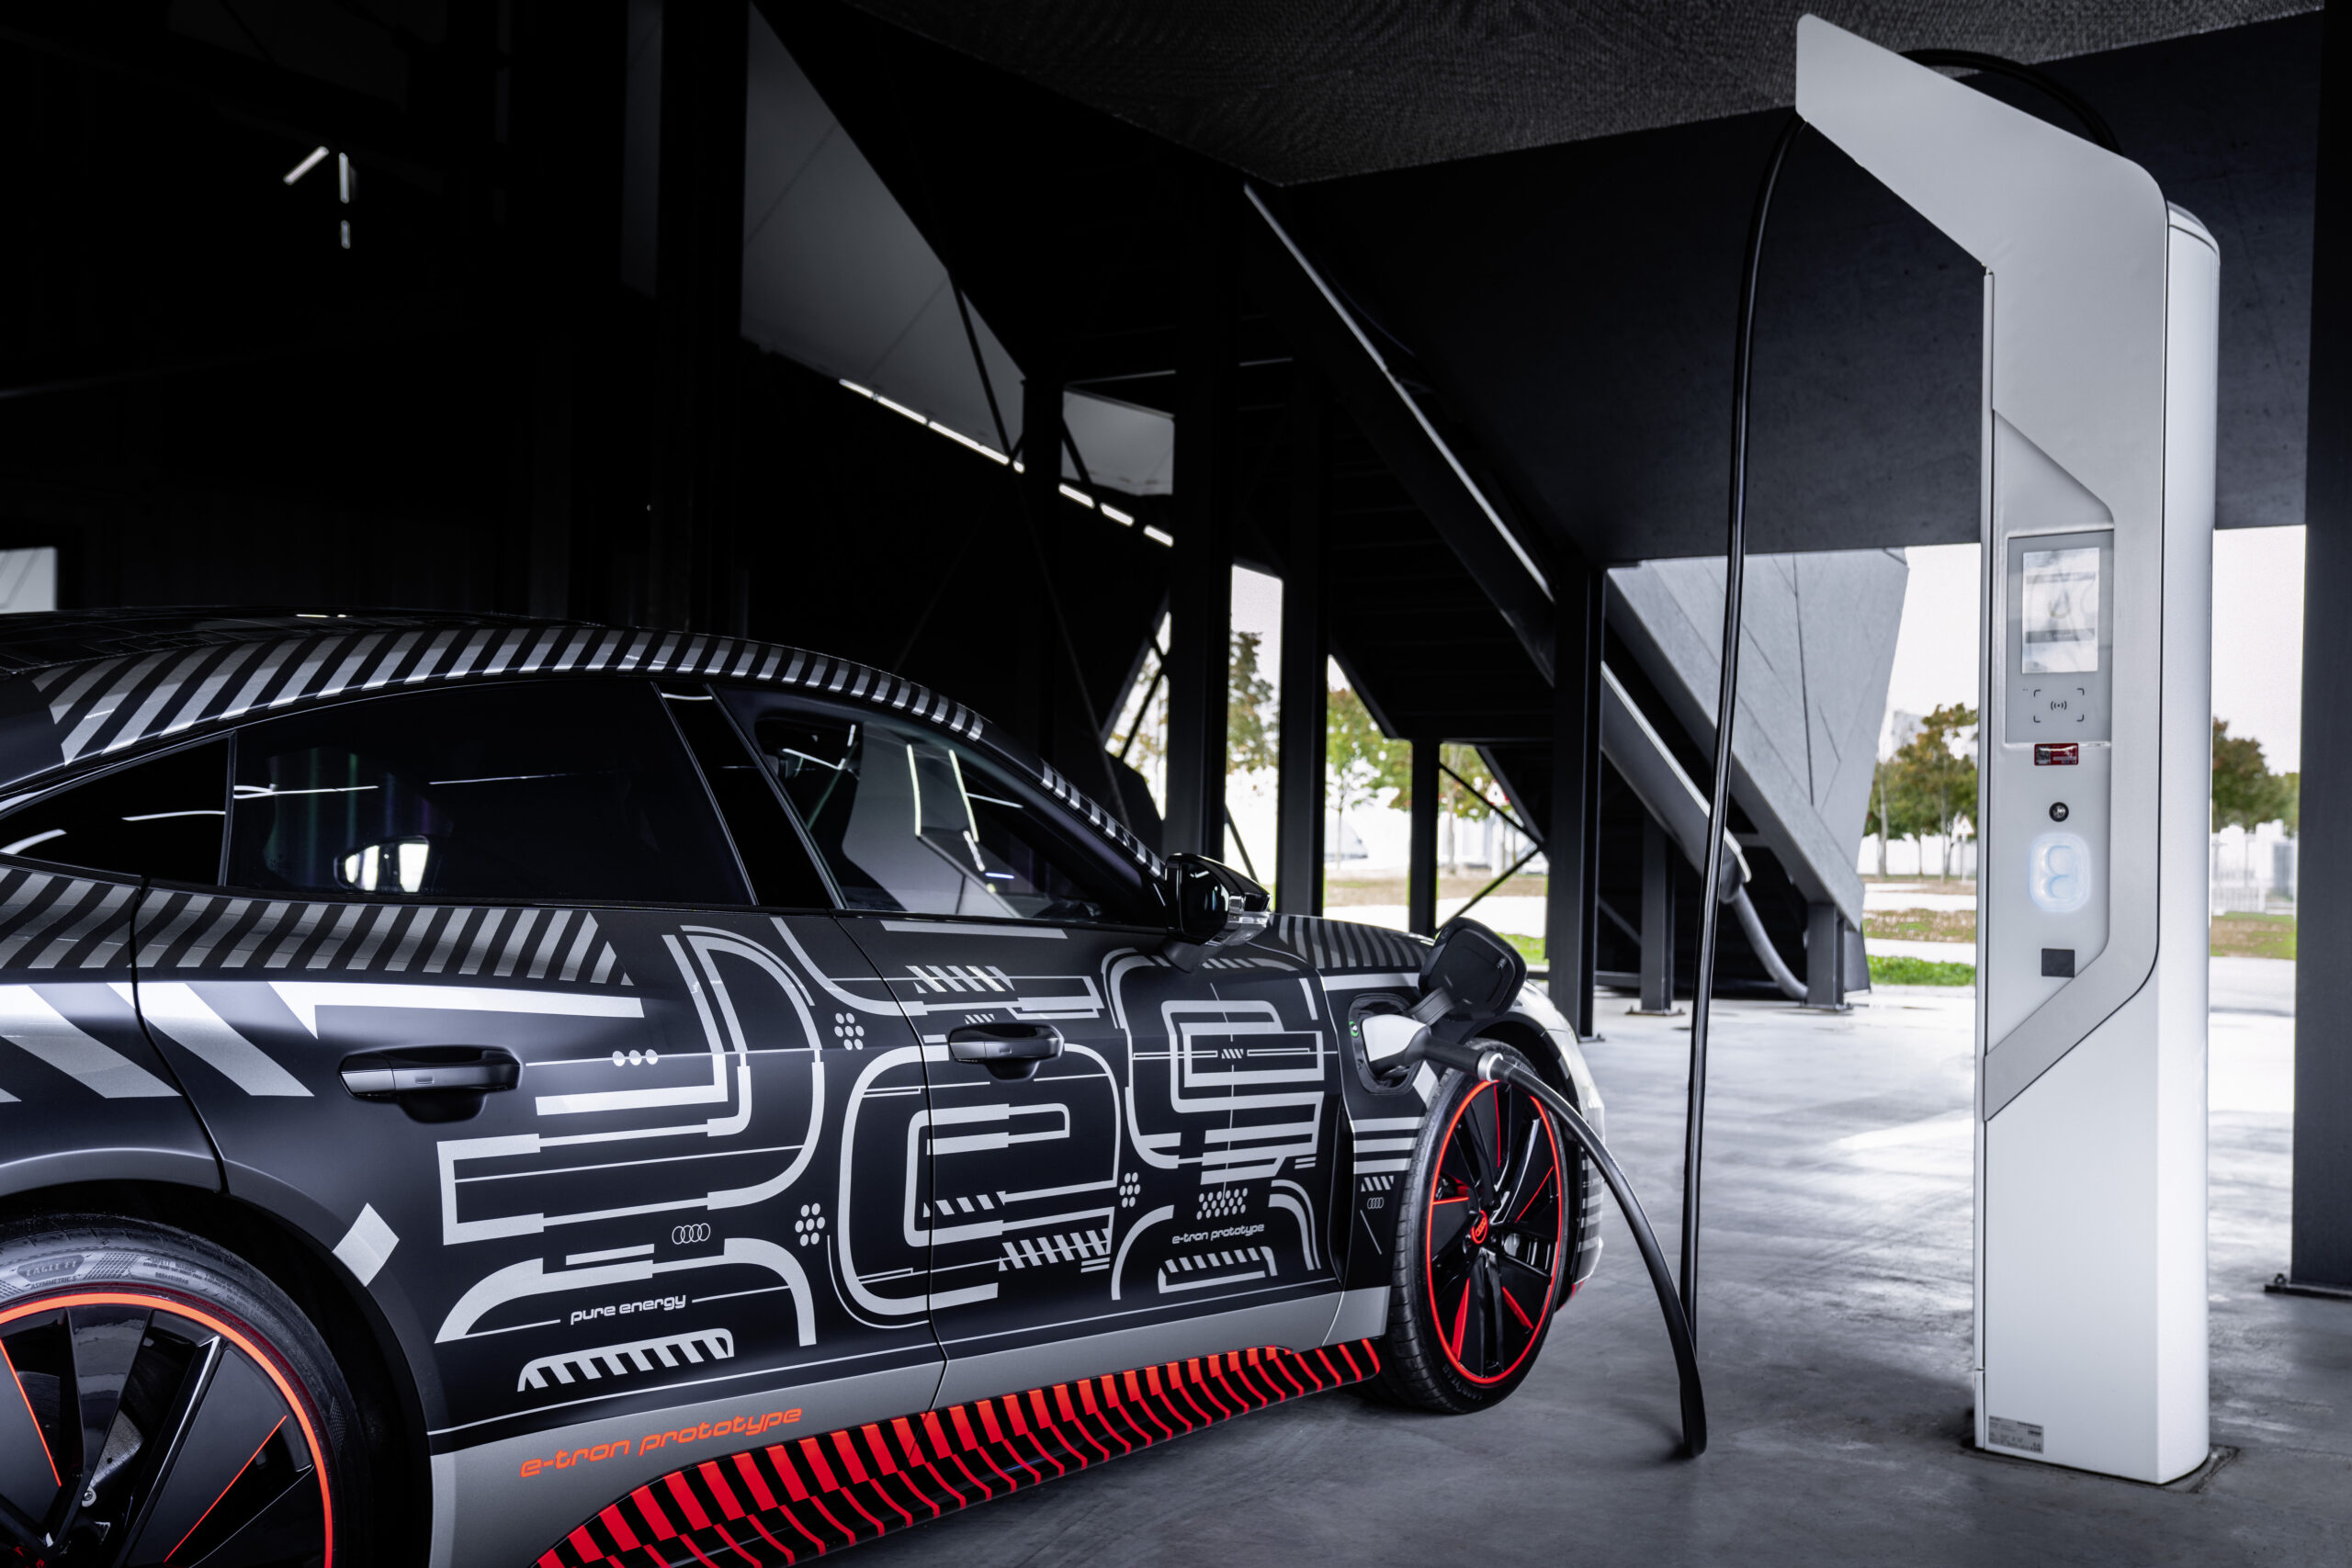 Mispend Piping ekskrementer Audi e-tron GT afspejler passion for kvalitet | IT-Kanalen